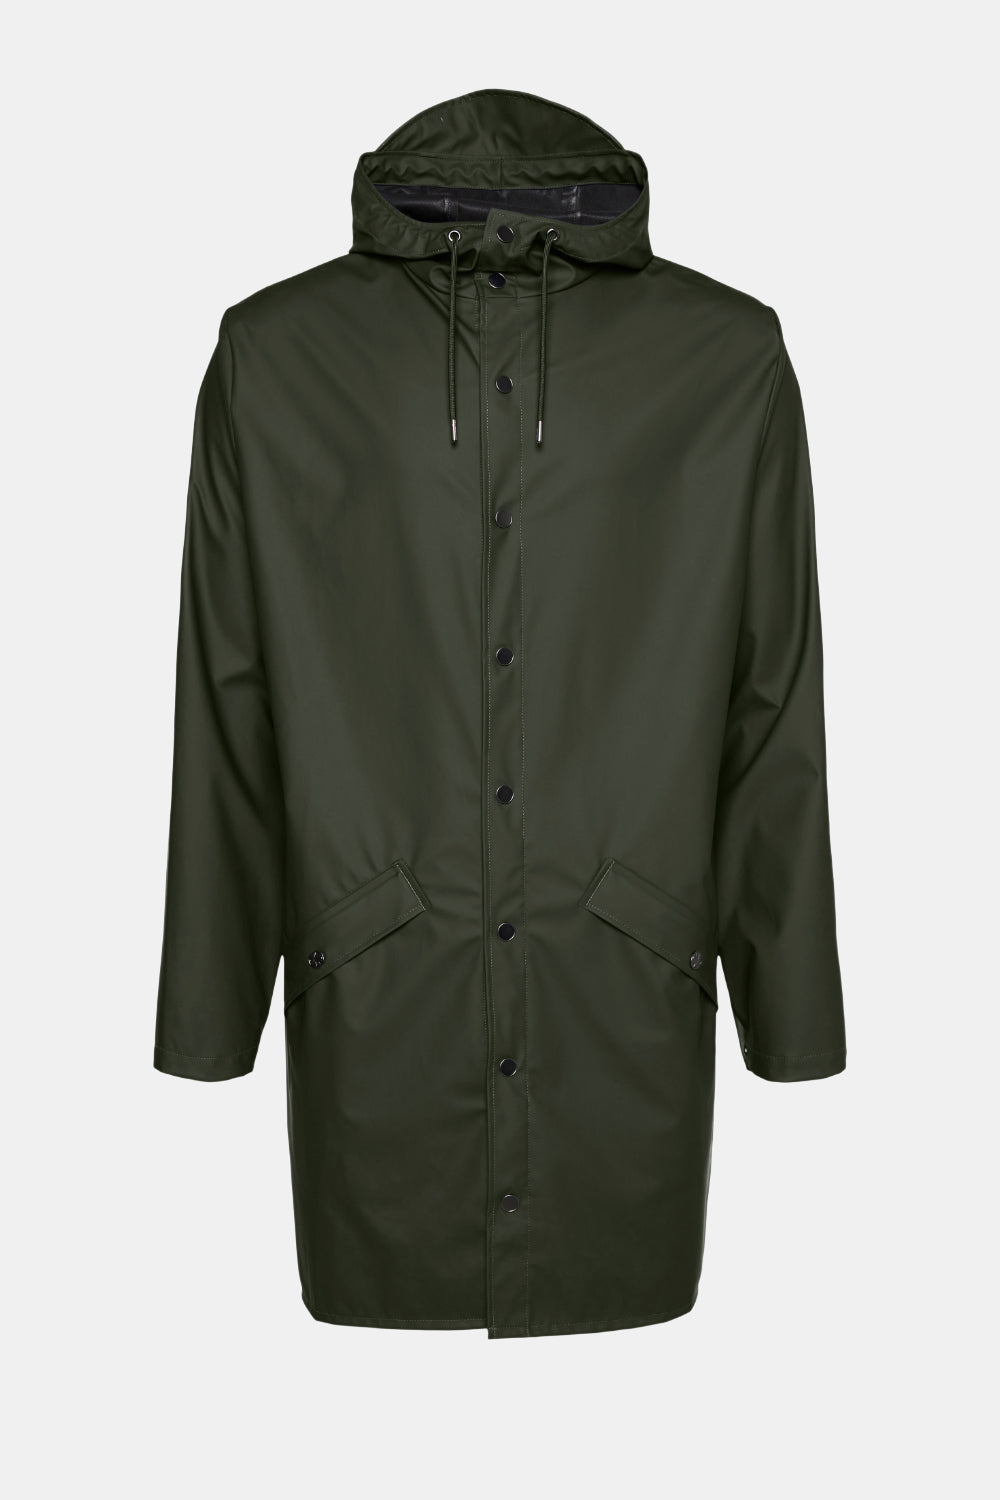 Rains Long Jacket (Green)